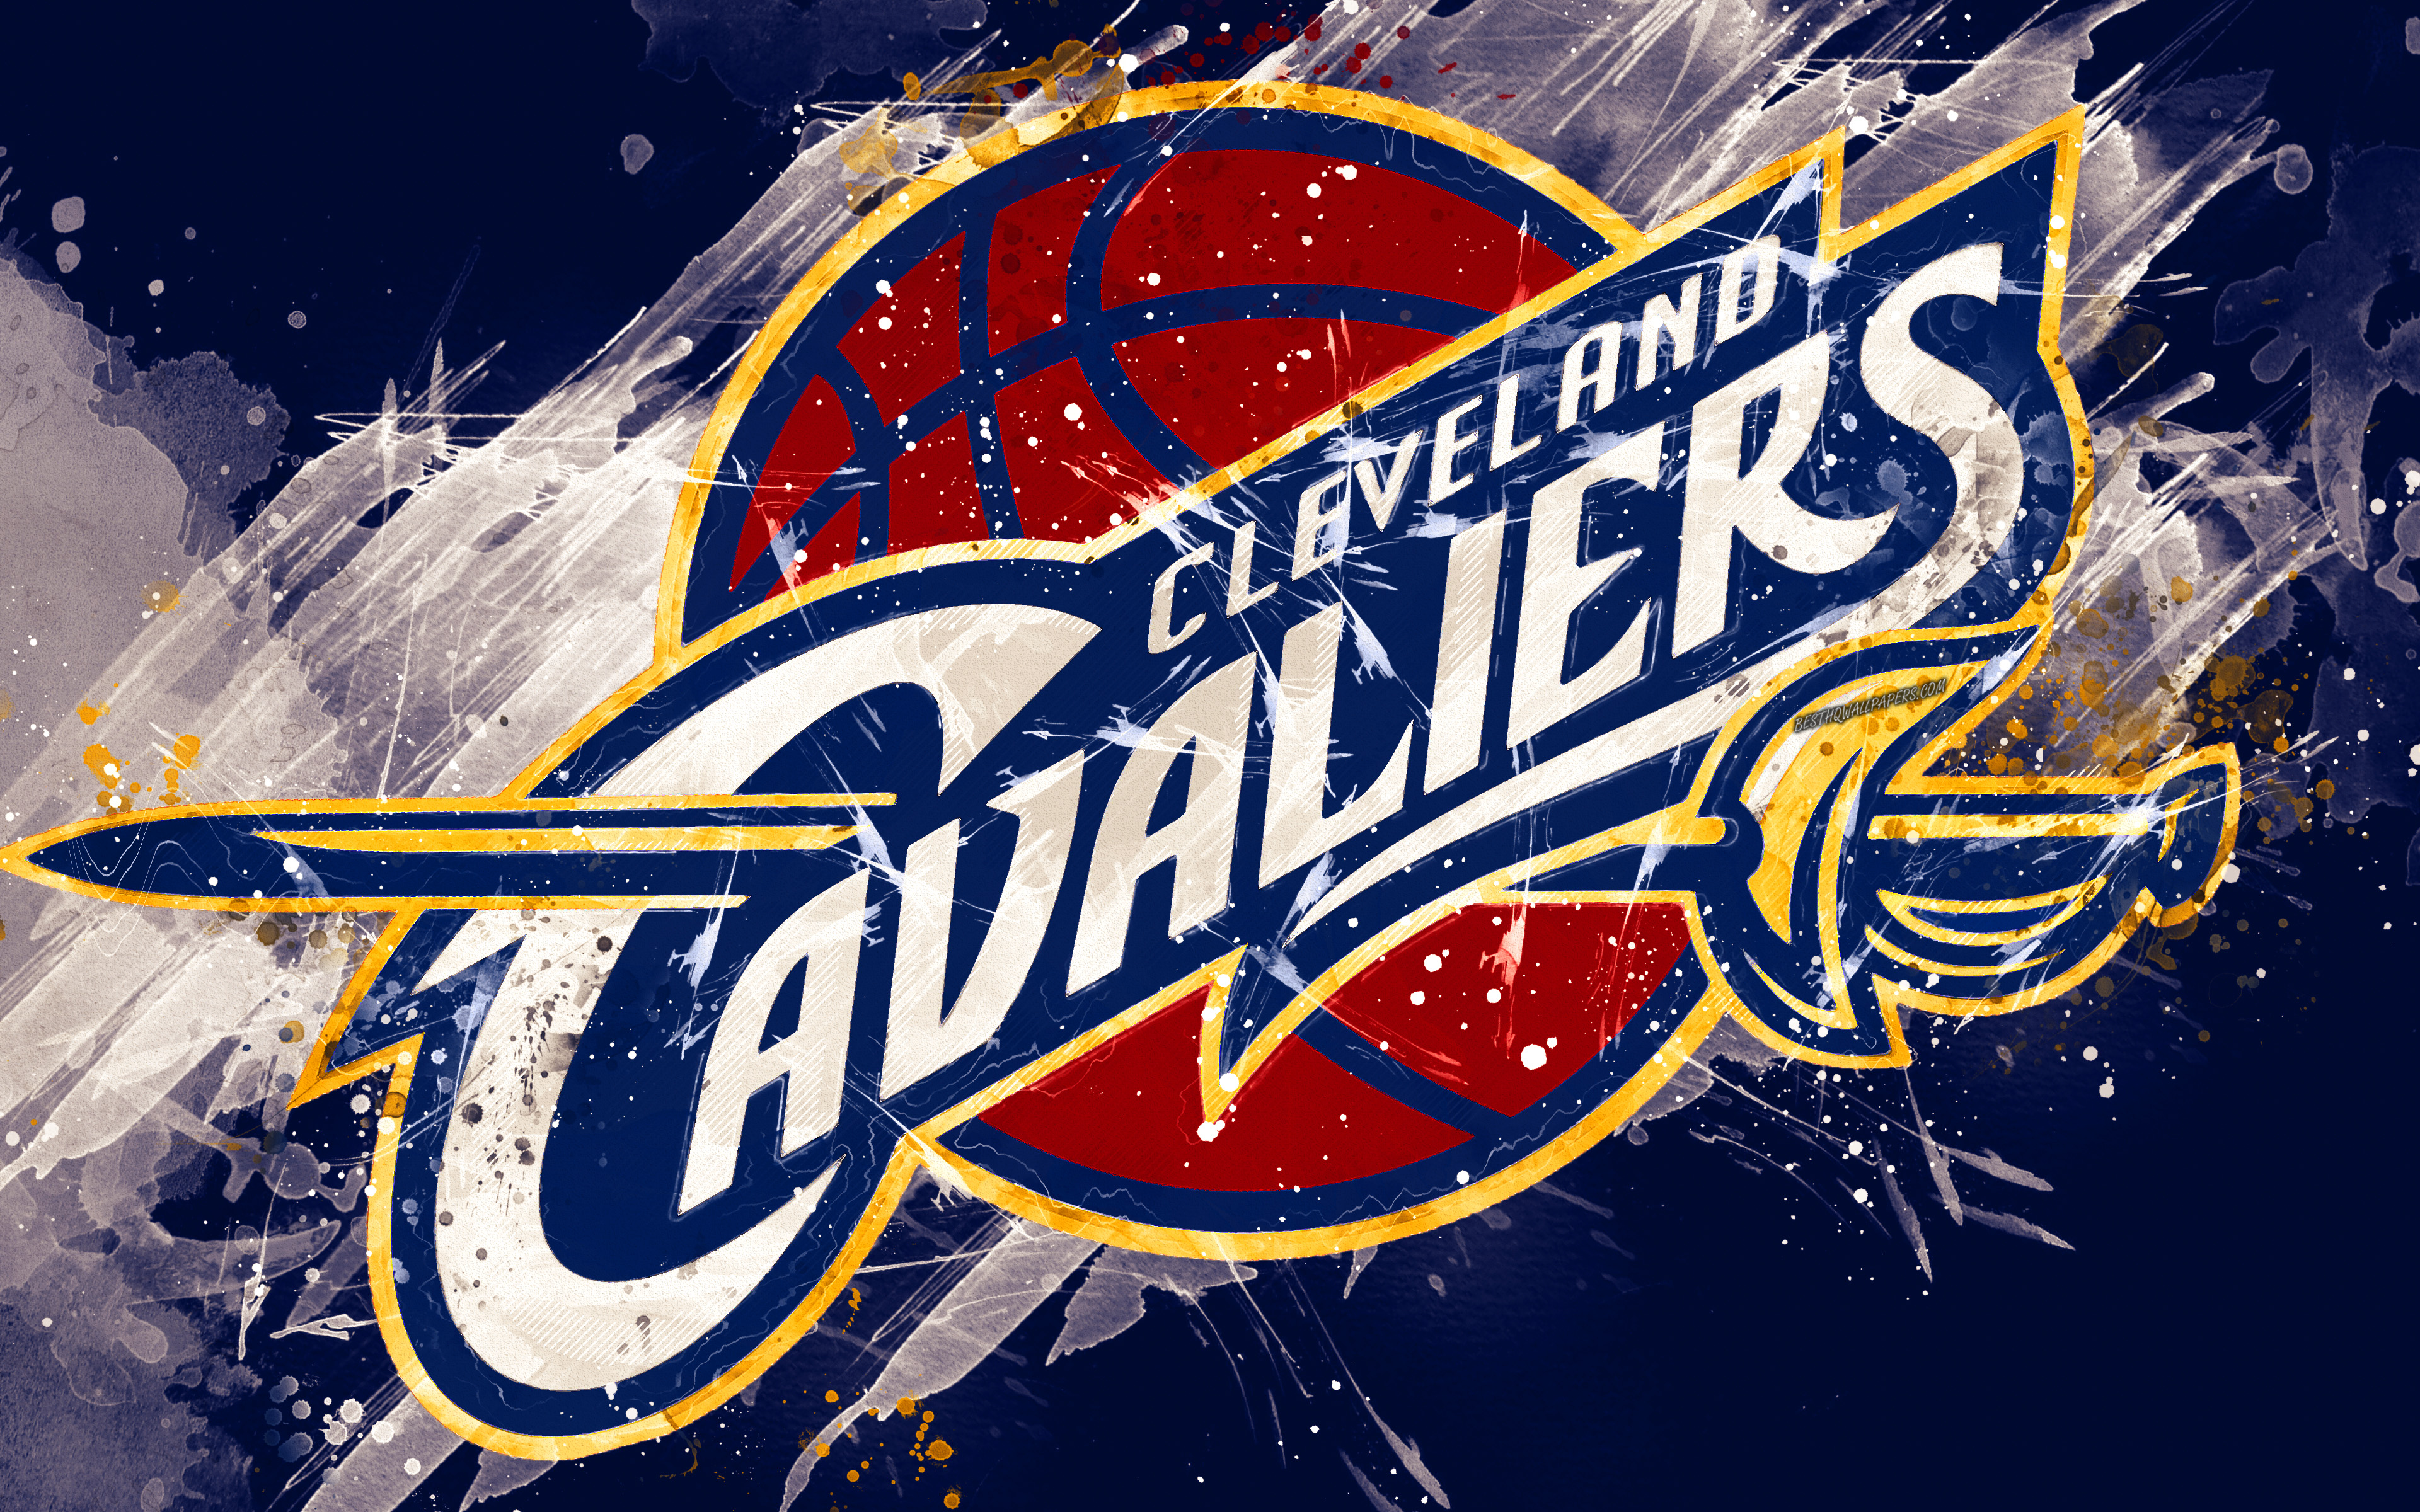 cleveland cavaliers, sports, basketball, logo, nba